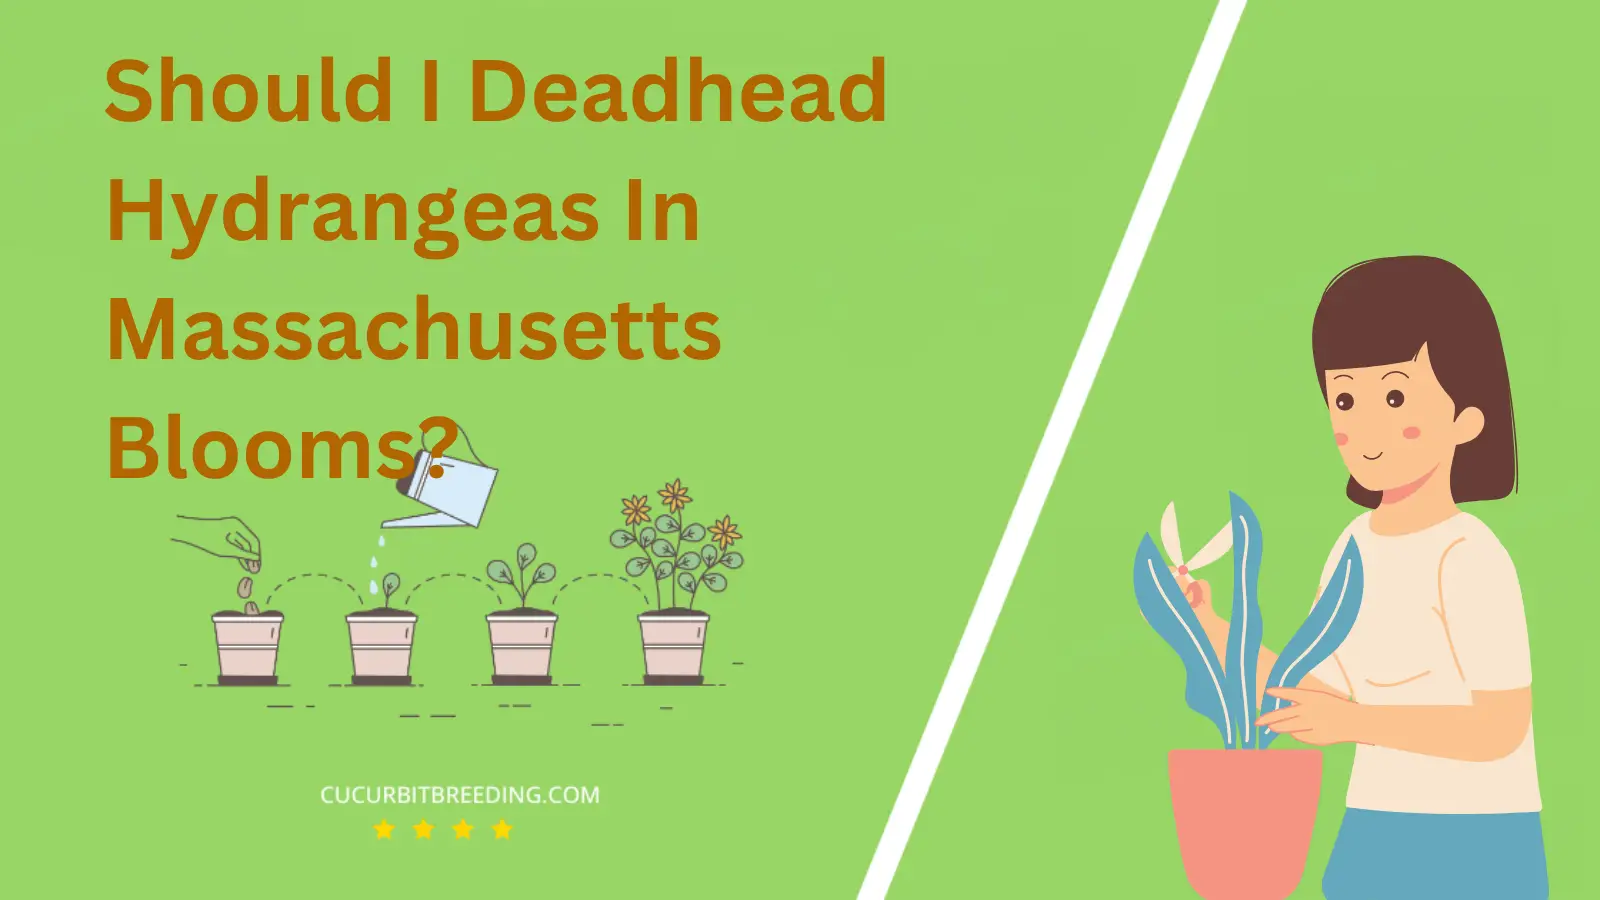 Should I Deadhead Hydrangeas In Massachusetts Blooms?